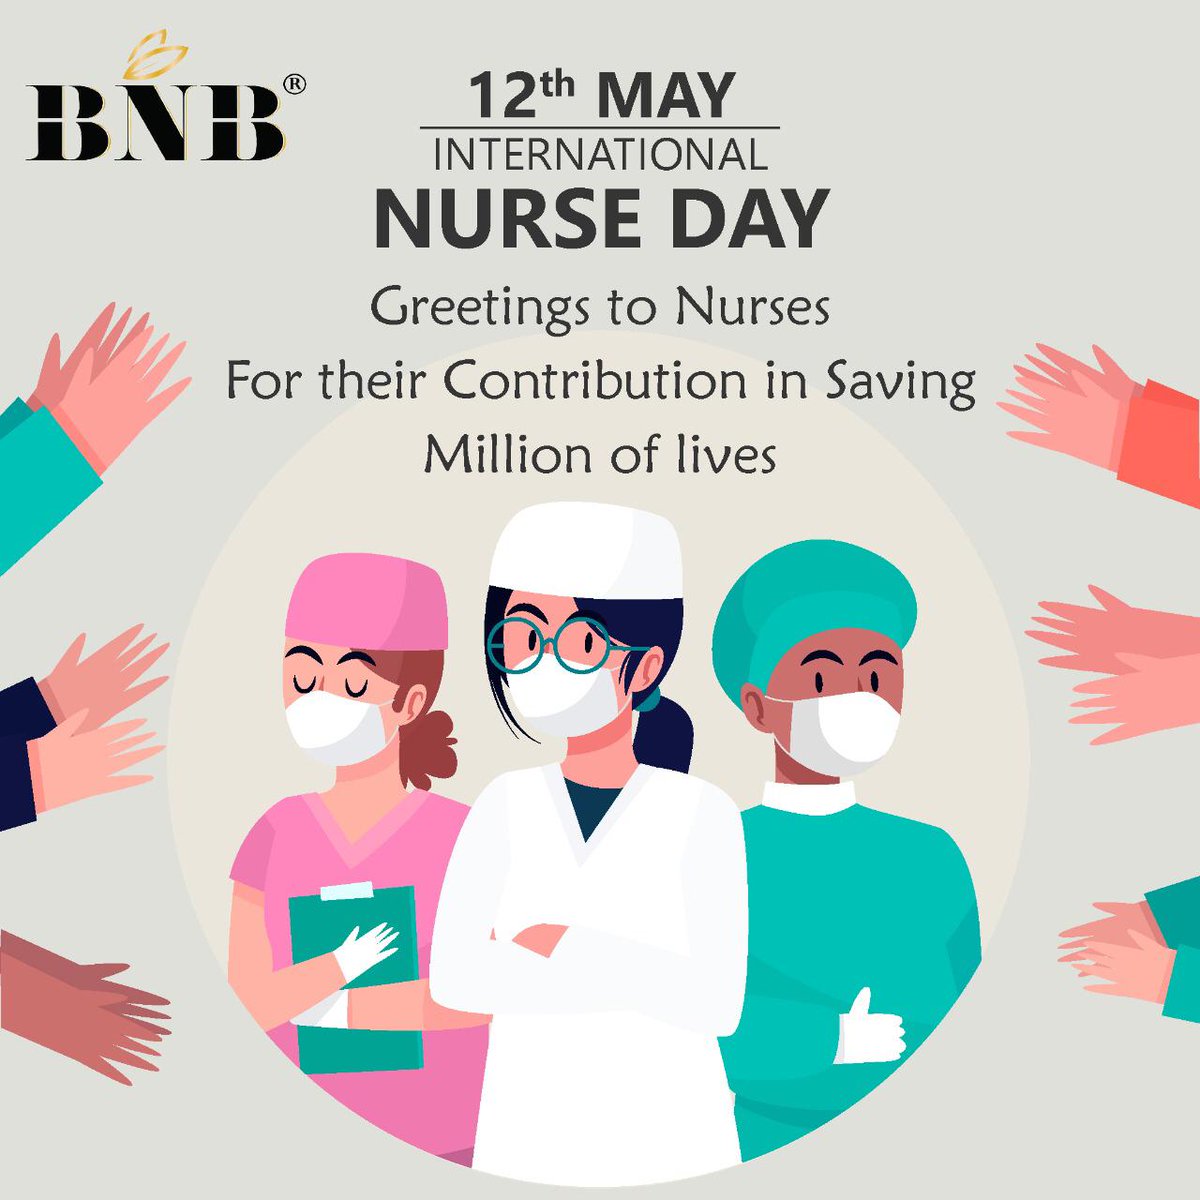 Greetings to nurses for their contribution in saving million of lives
#nurse #nurseday #internationalnurseday #stayhealthy #greetings #happynurseday #nursesweek #stayhomestayhealthy #BNB